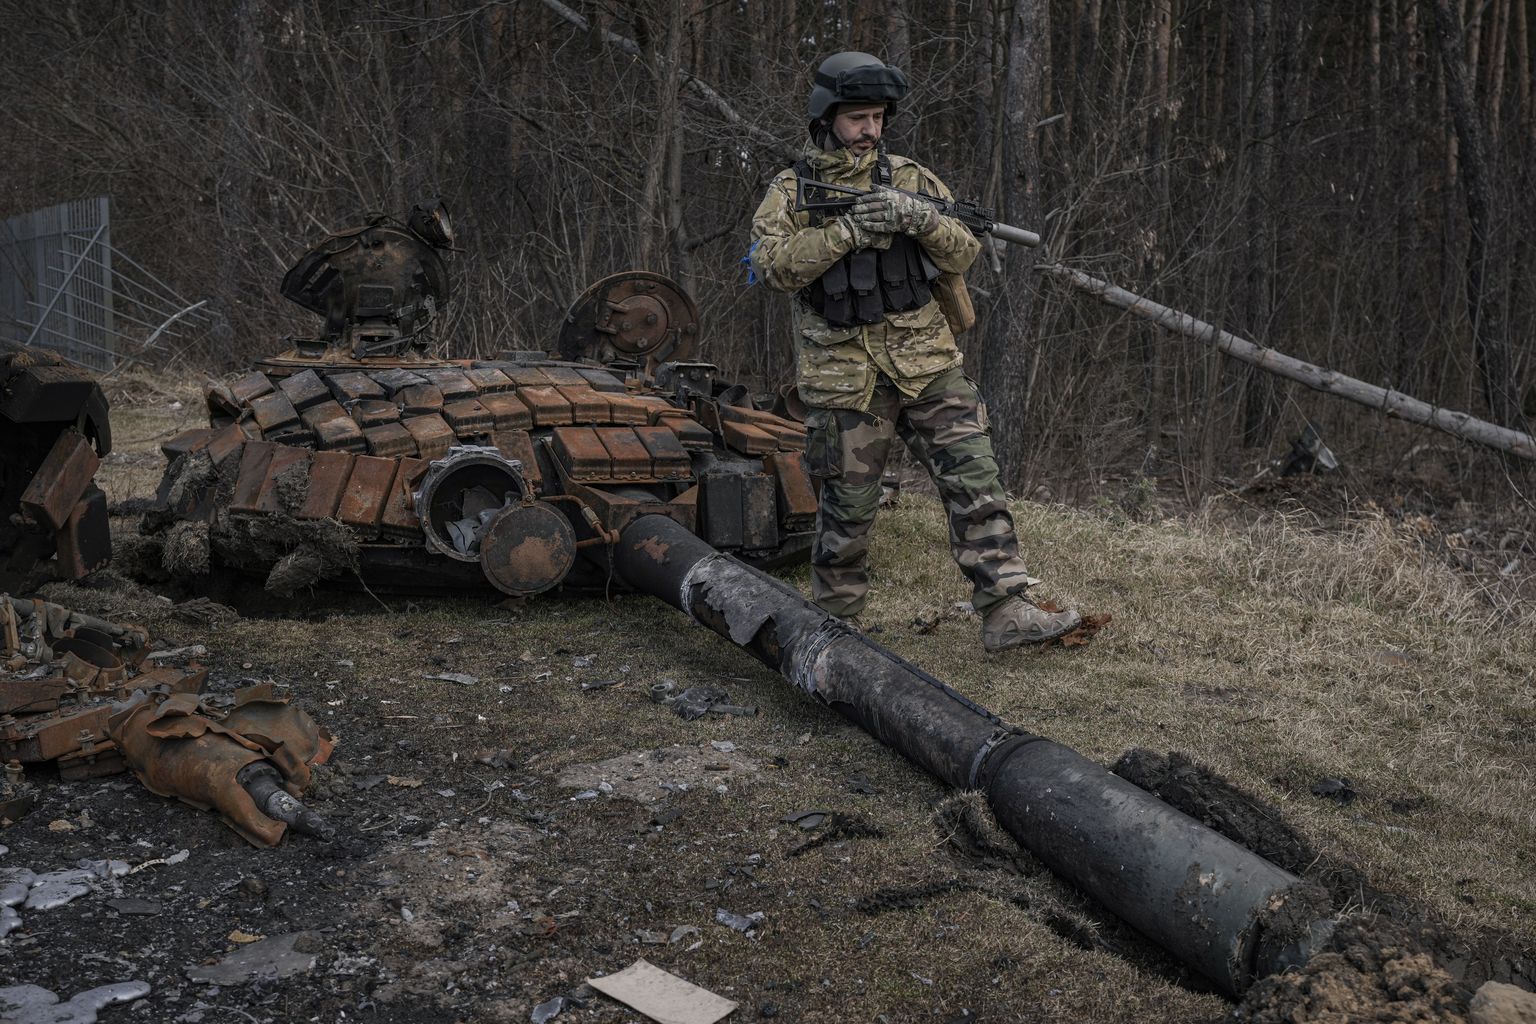 A Ukrainian serviceman walks next to the wreck of a Russian tank in Stoyanka, Ukraine, الأحد, الذي تم تحديده بالاستفتاء على الدستور 27, 2022.